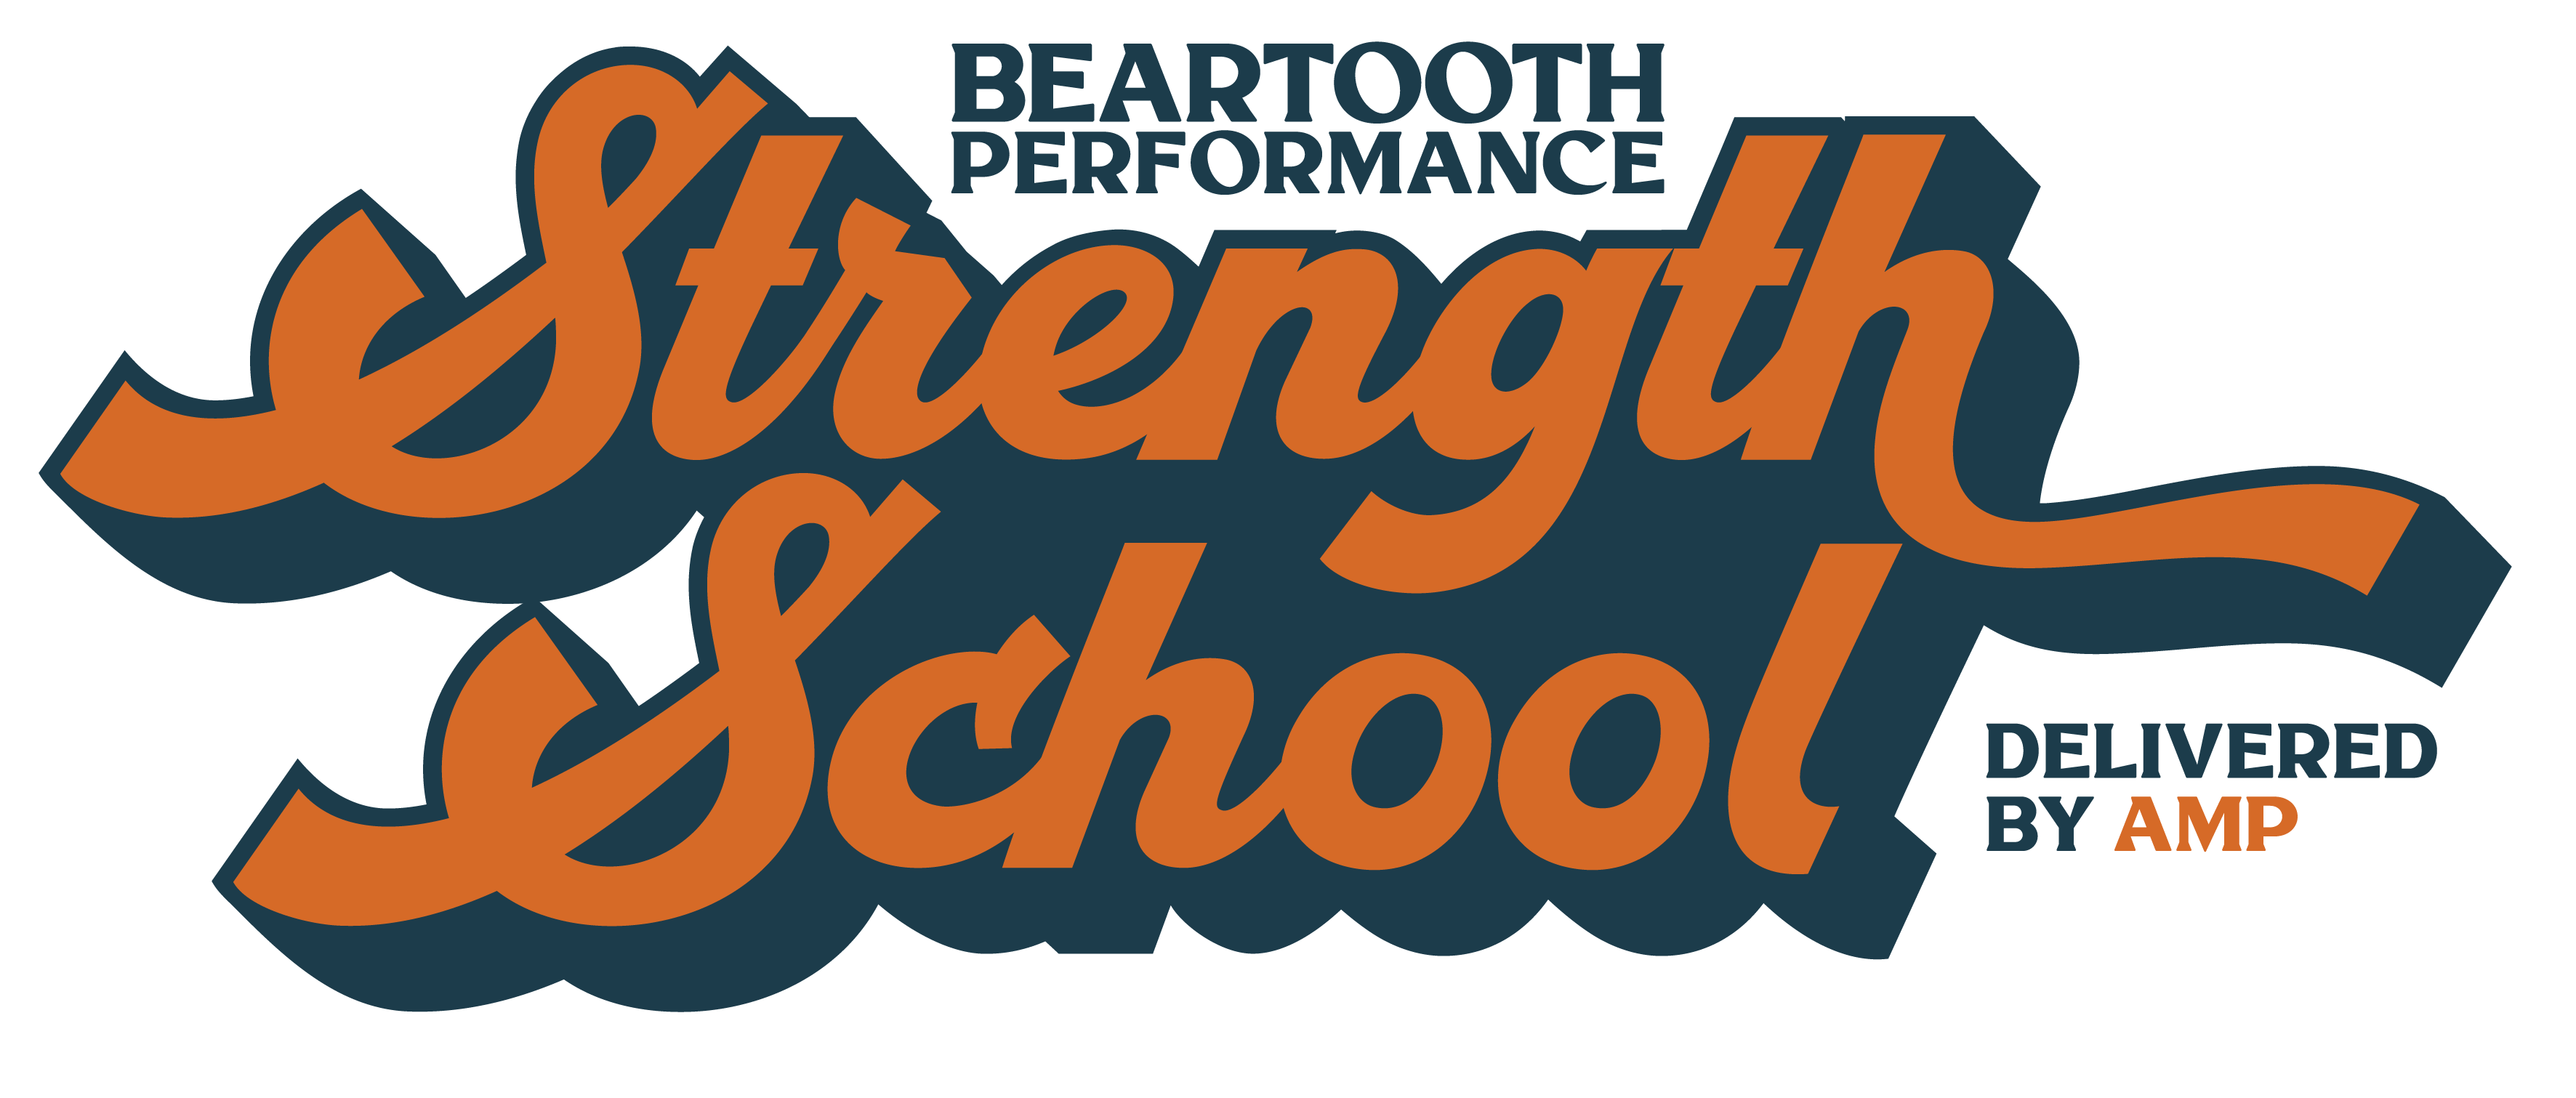 Beartooth-Performance_Strength-School-Logos-01